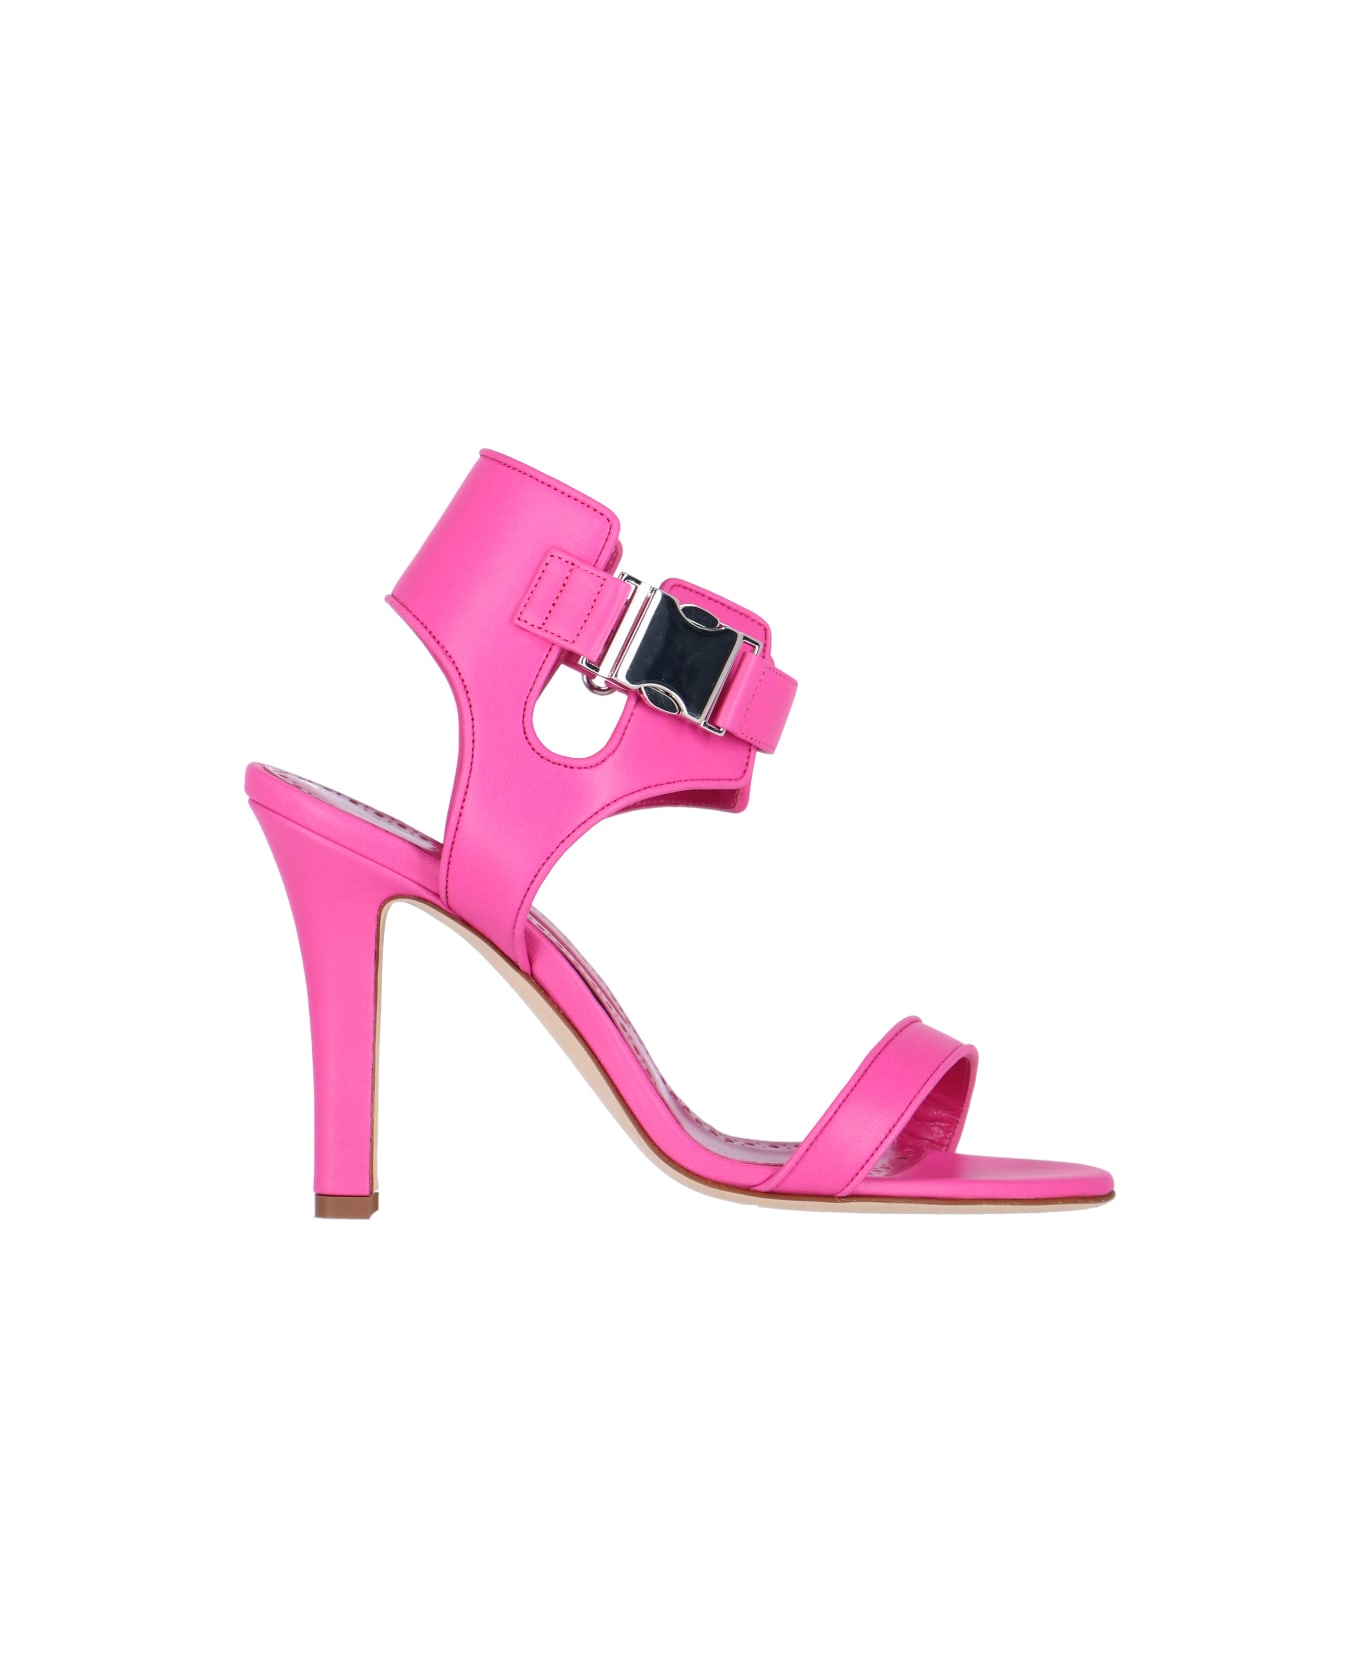 Manolo Blahnik 'pollux' Sandals - Pink サンダル